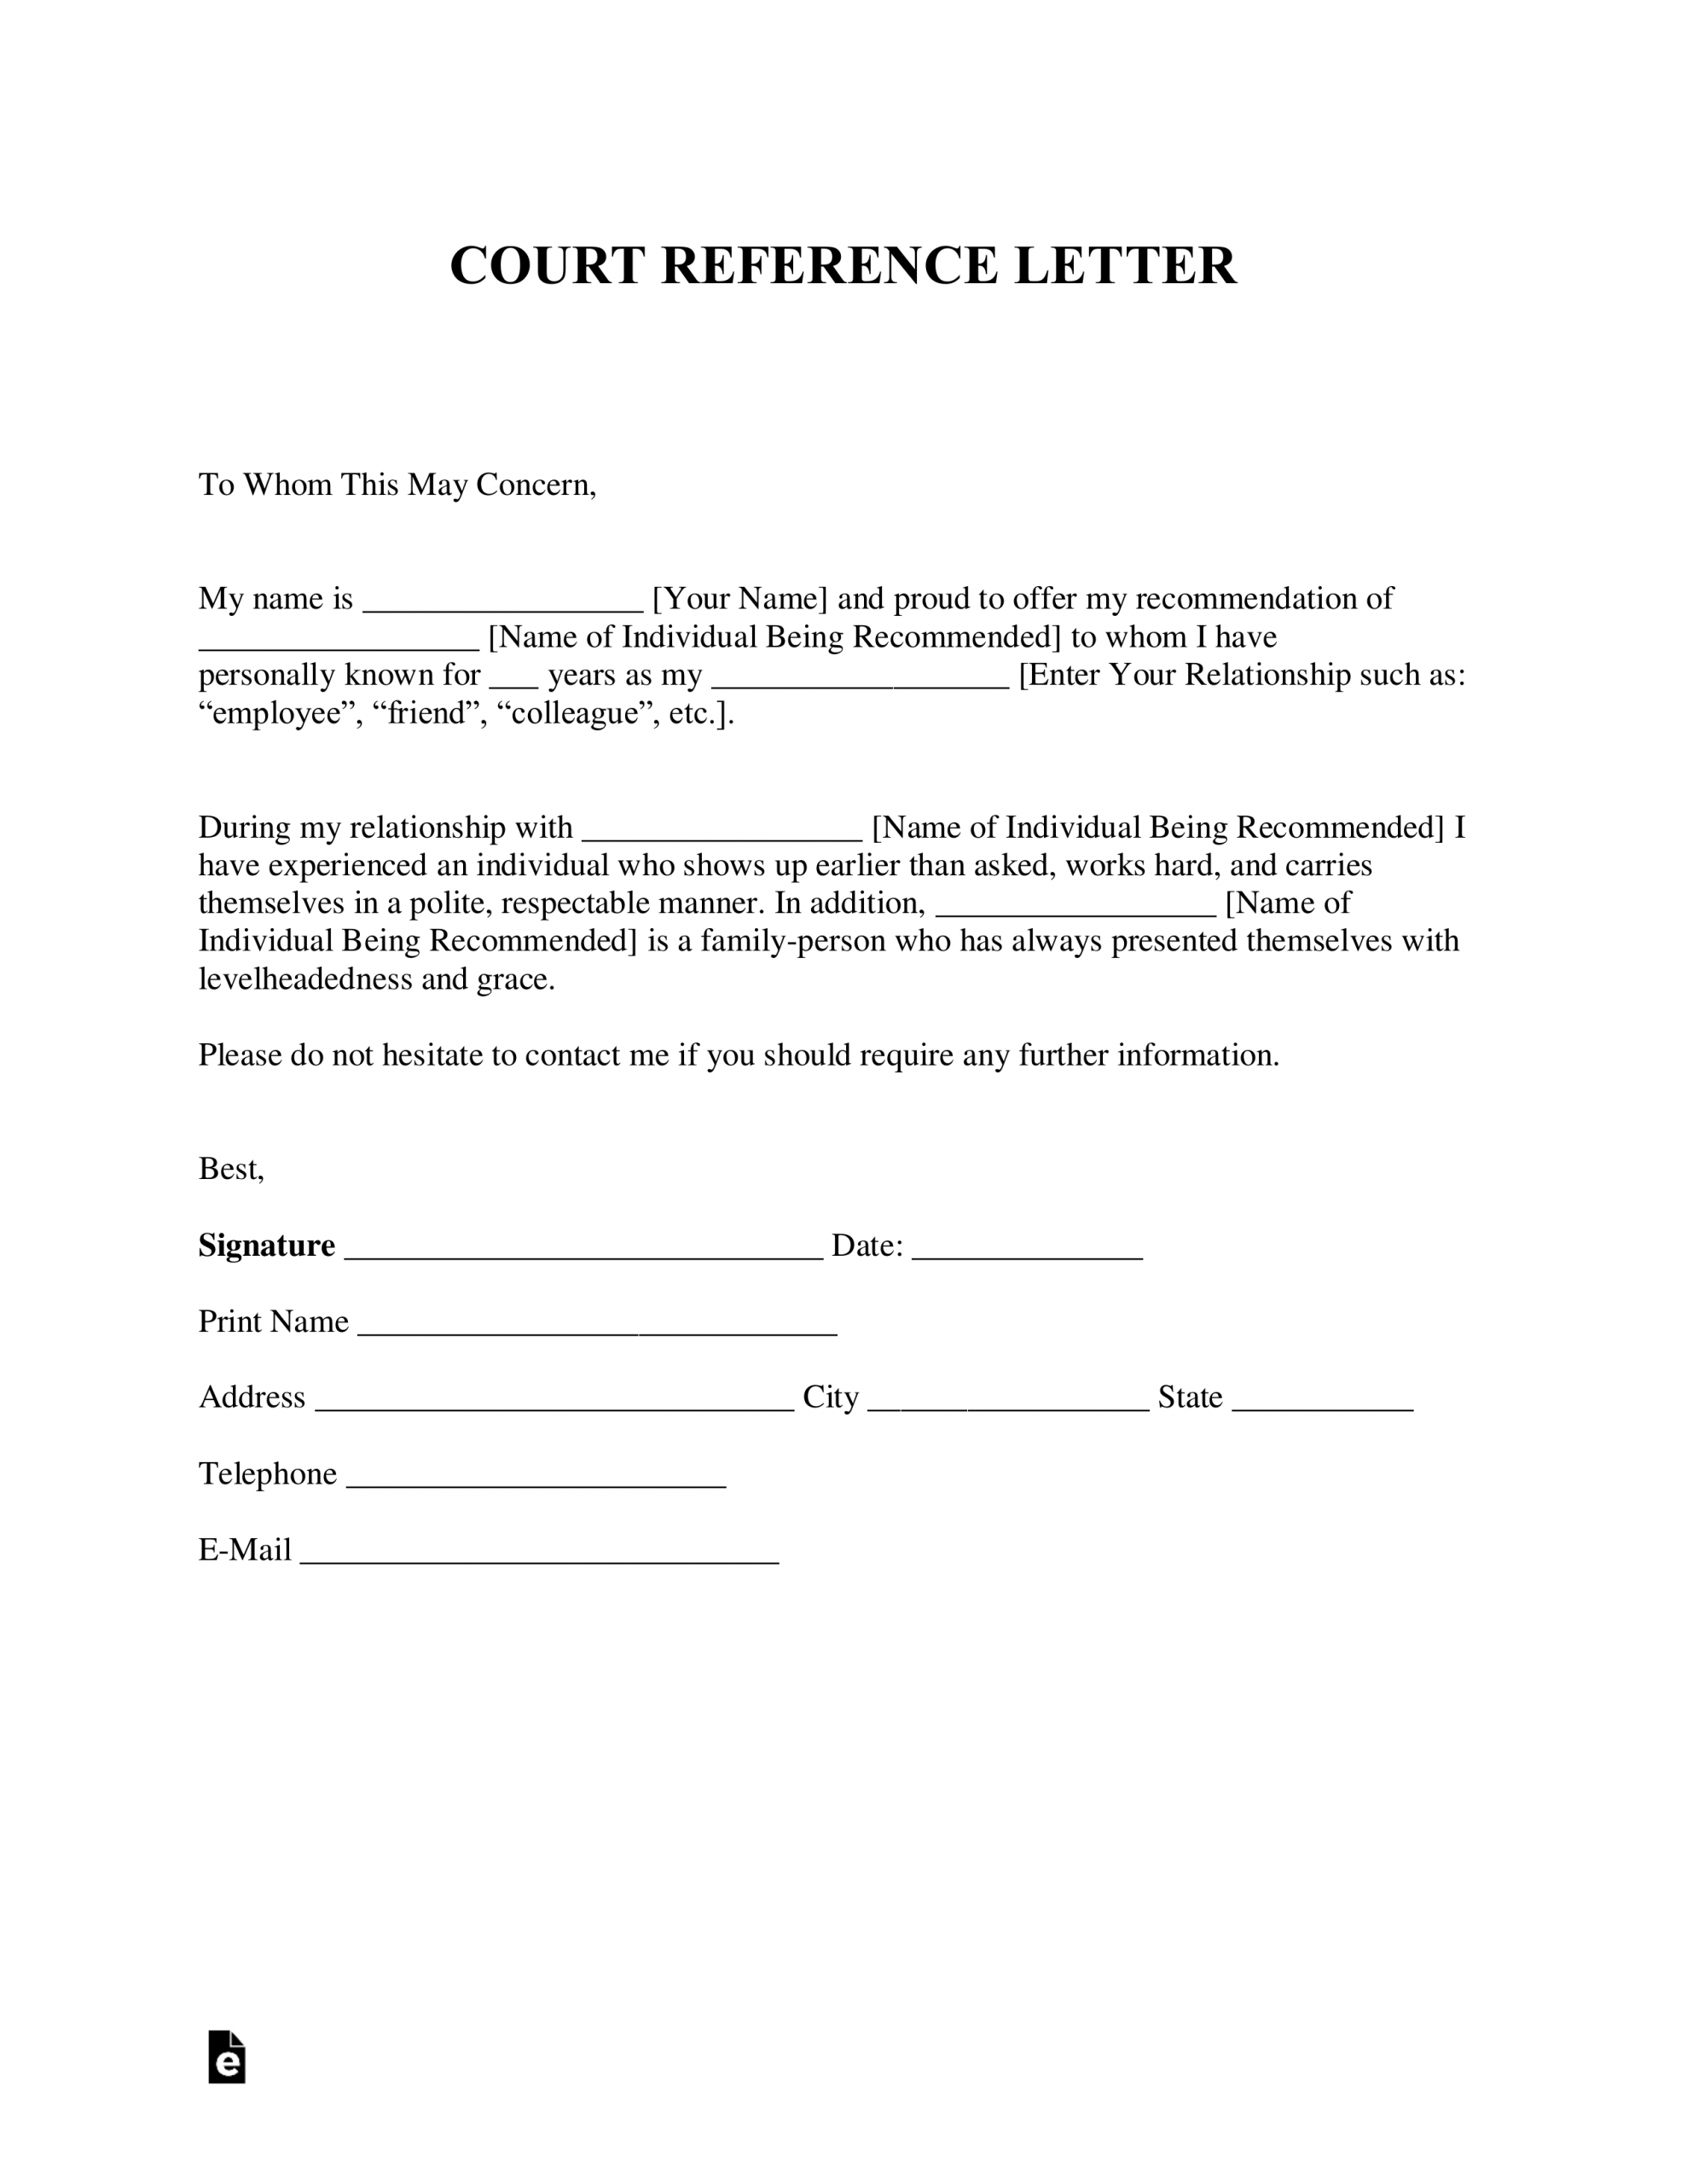 Letter Of Recommendation For Court Debandje inside dimensions 2550 X 3301